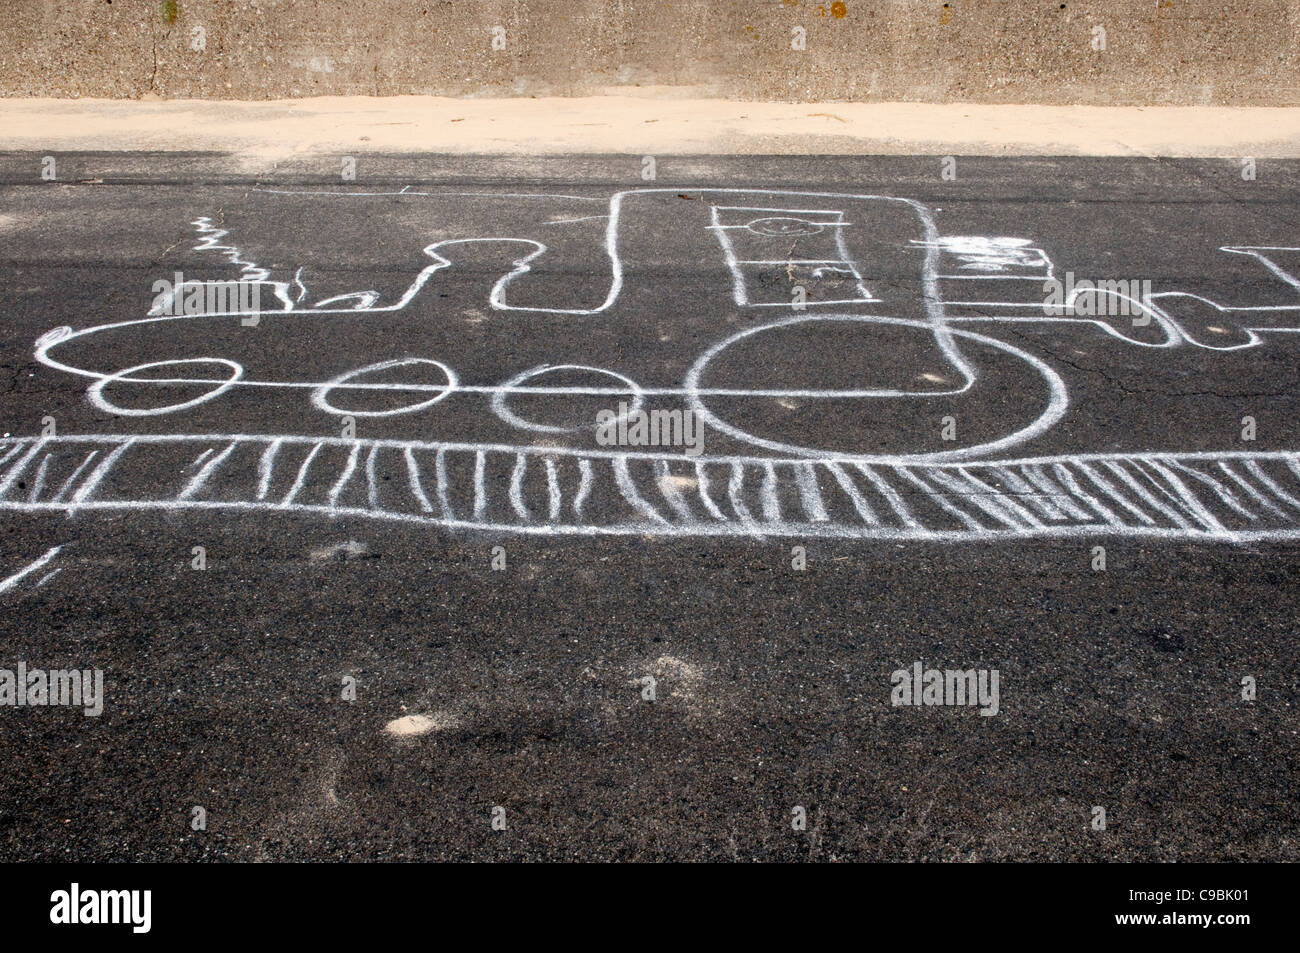 Germany, Northsea, Amrum, chalk drawing of locomotive on tarmac Stock Photo